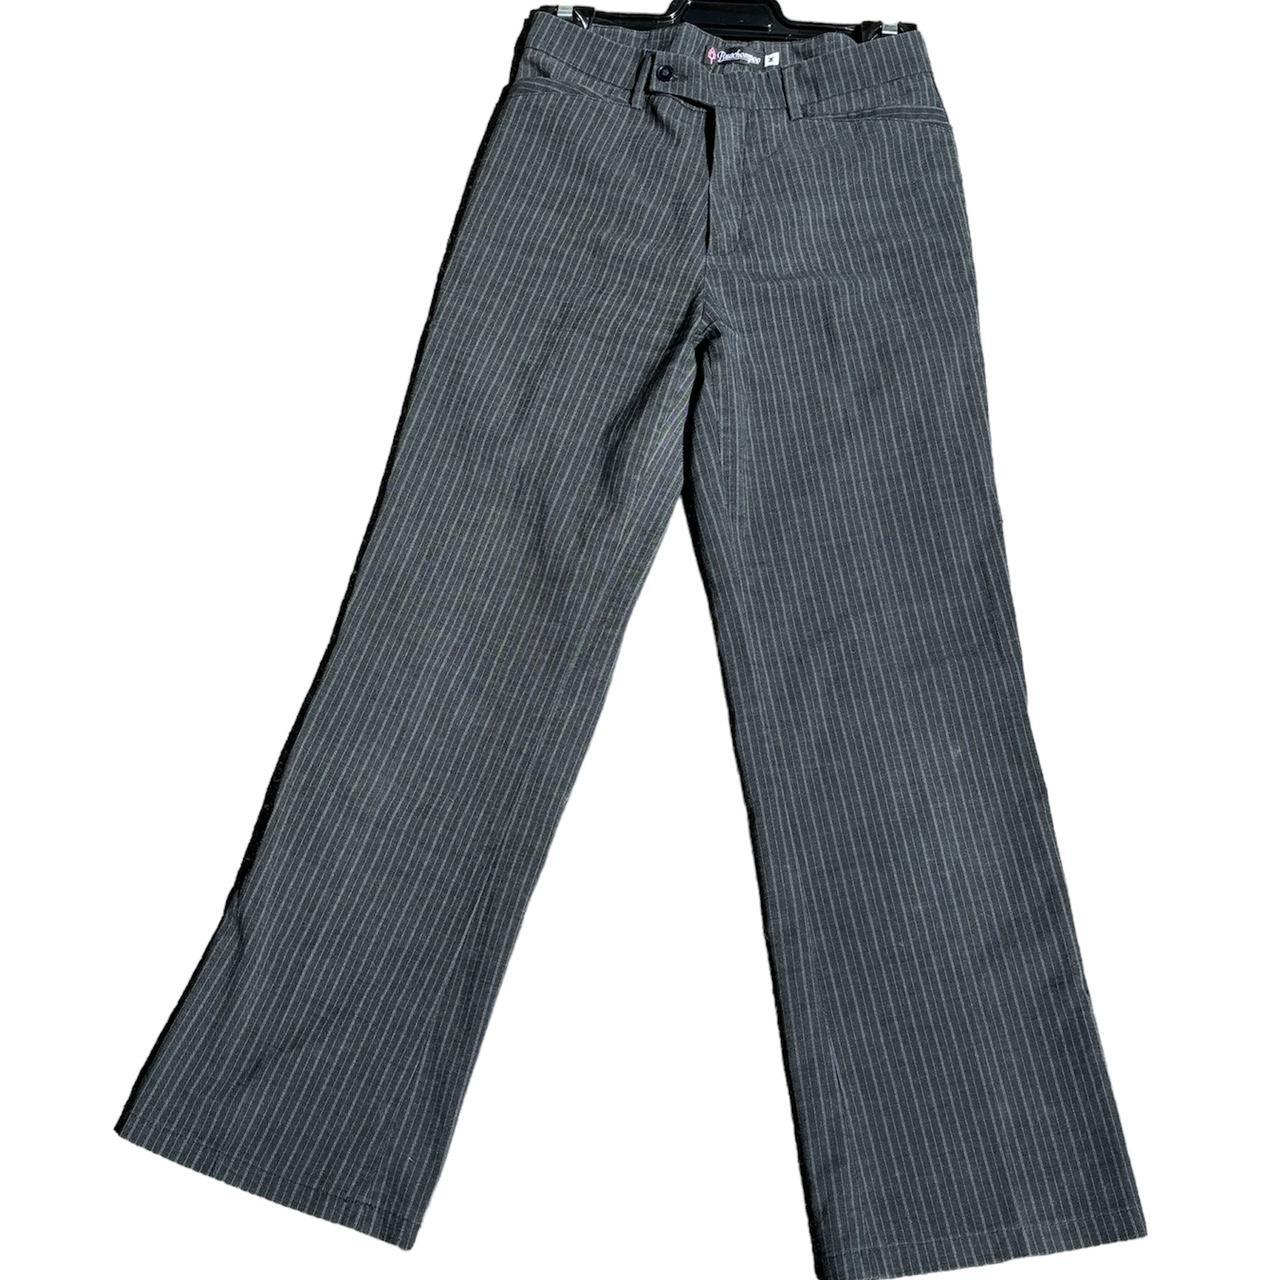 Vintage 2000s navy pinstripe pants -designed to sit... - Depop